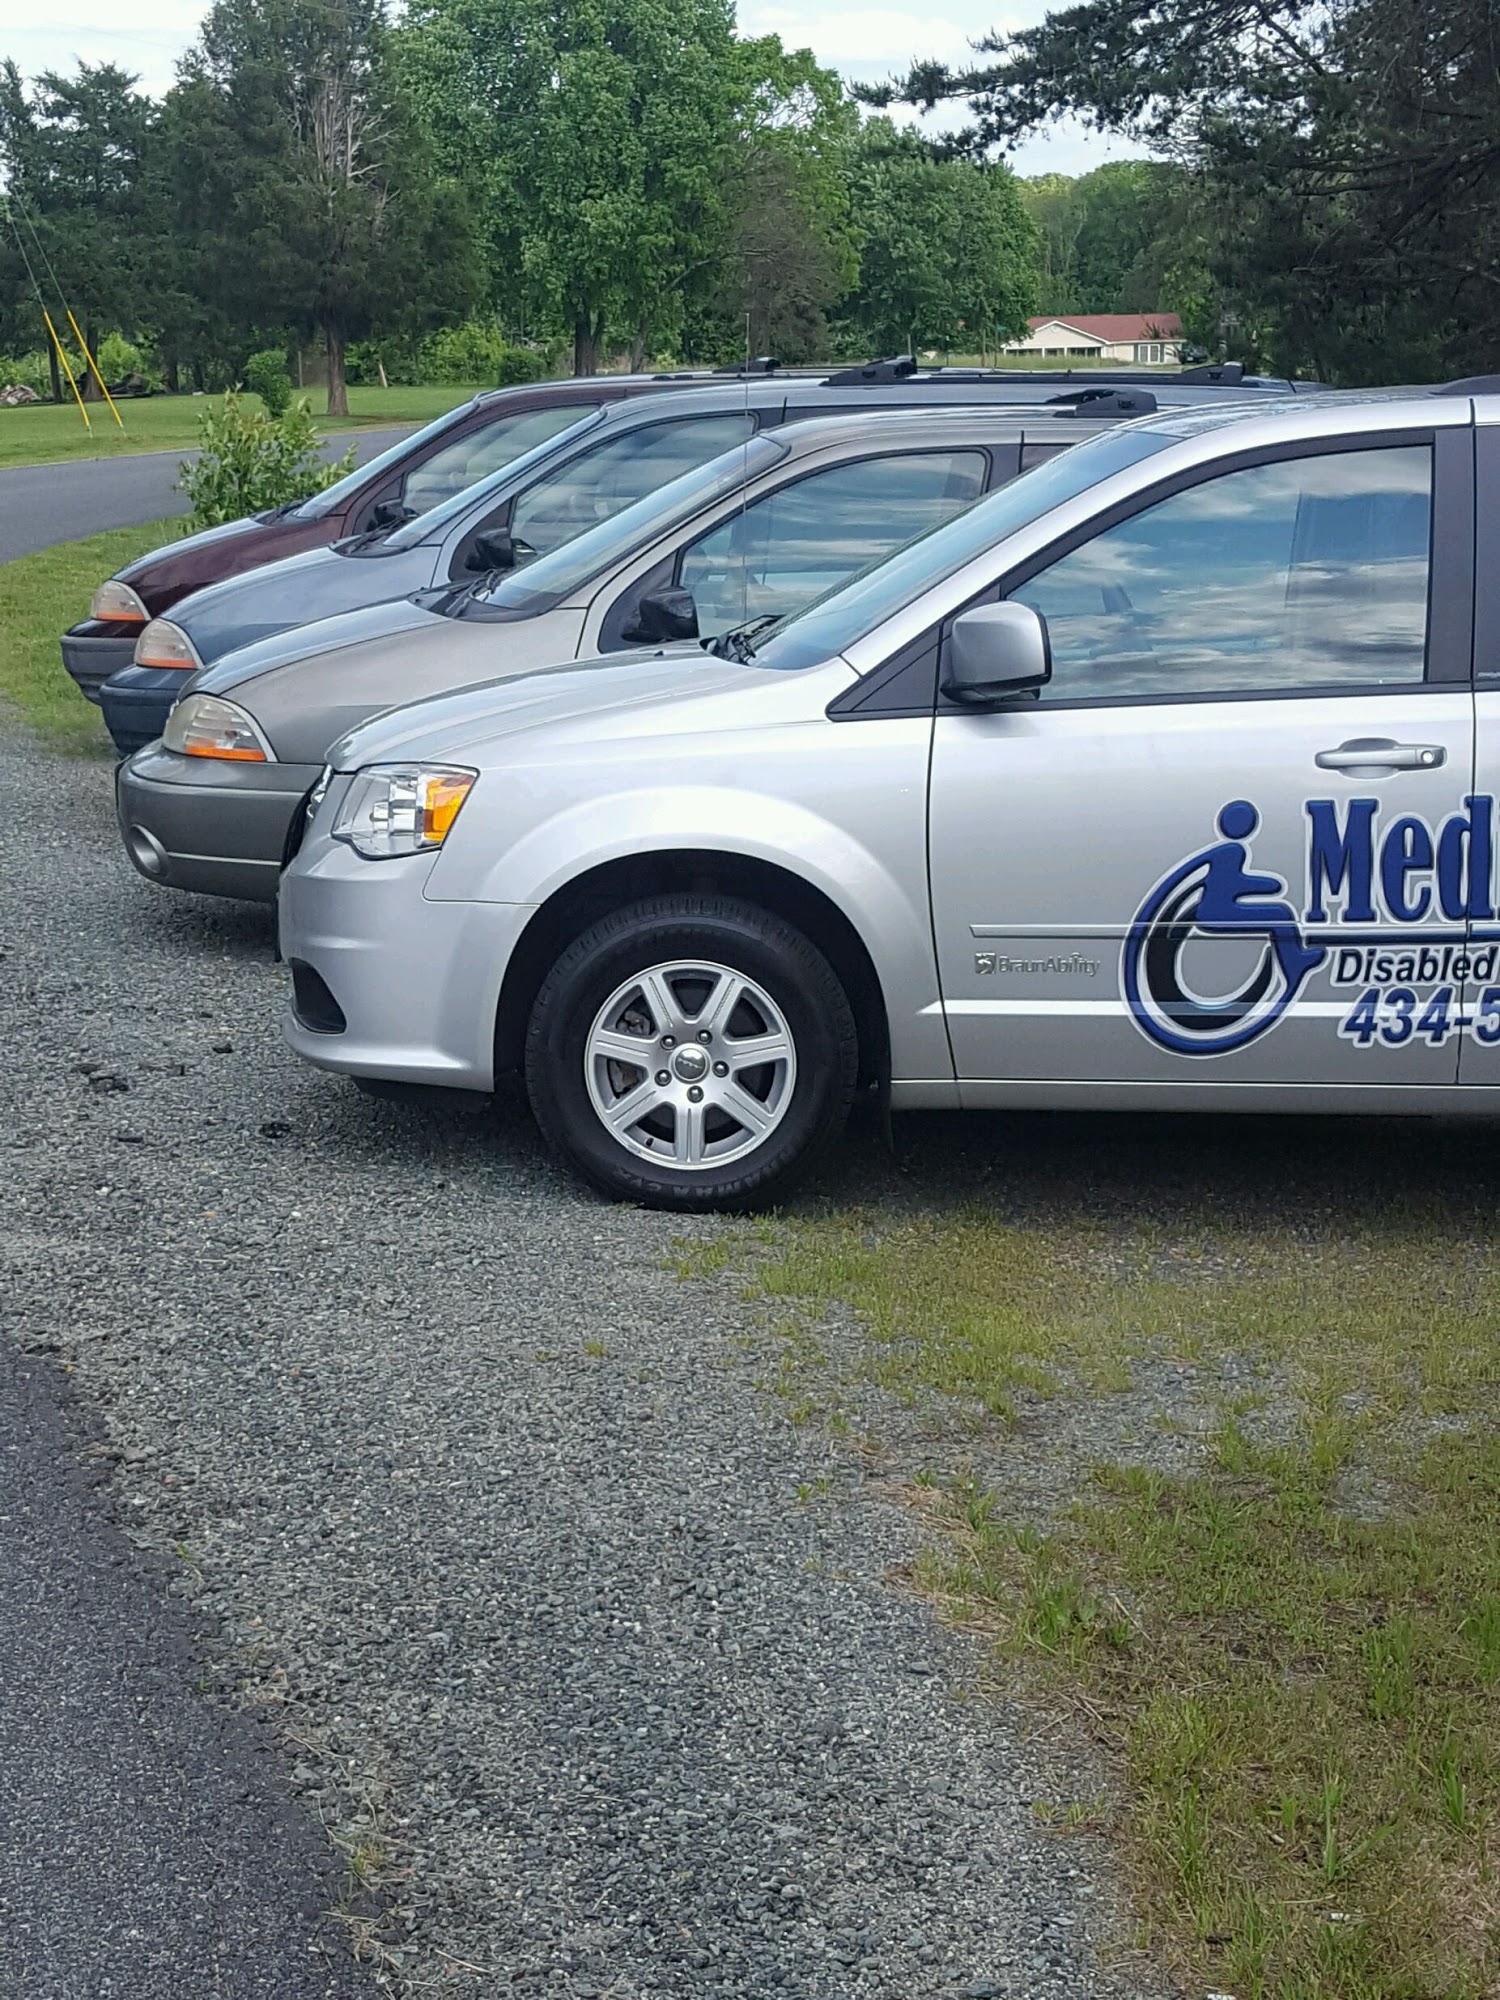 Medi-Ride